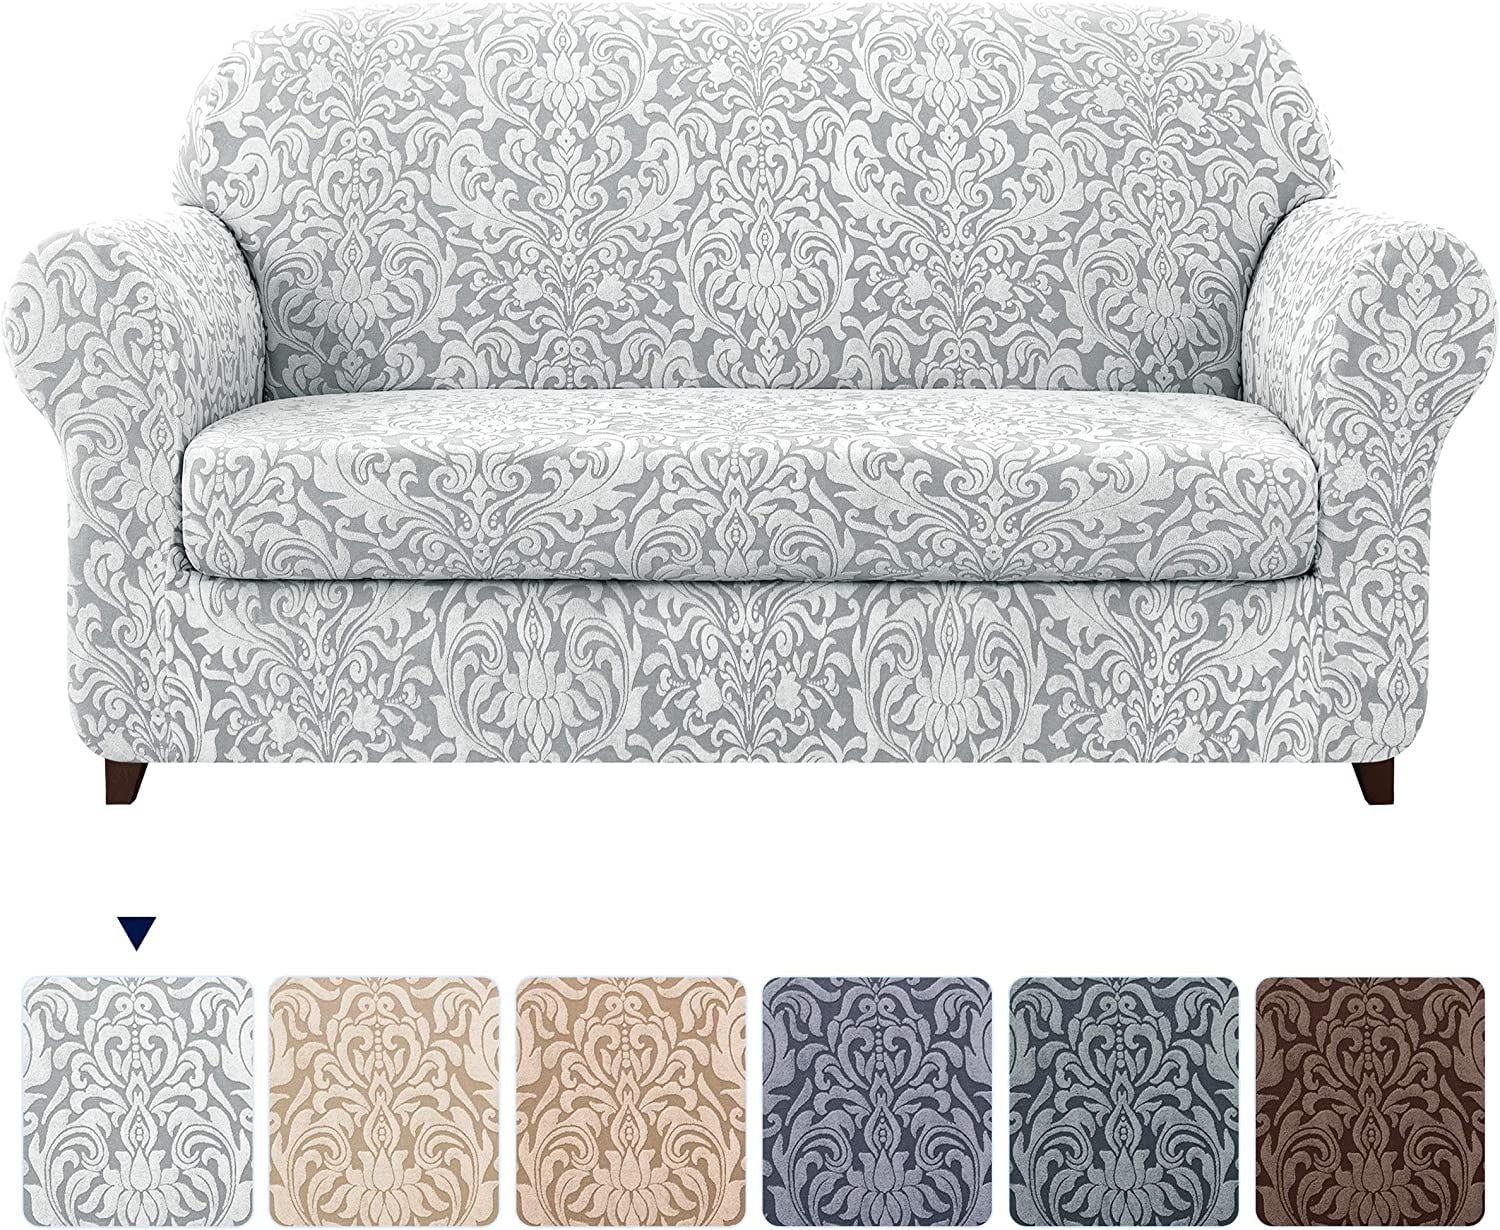 PureFit Stretch Oversized Sofa Slipcover Washable Kids Pets Greyish Green